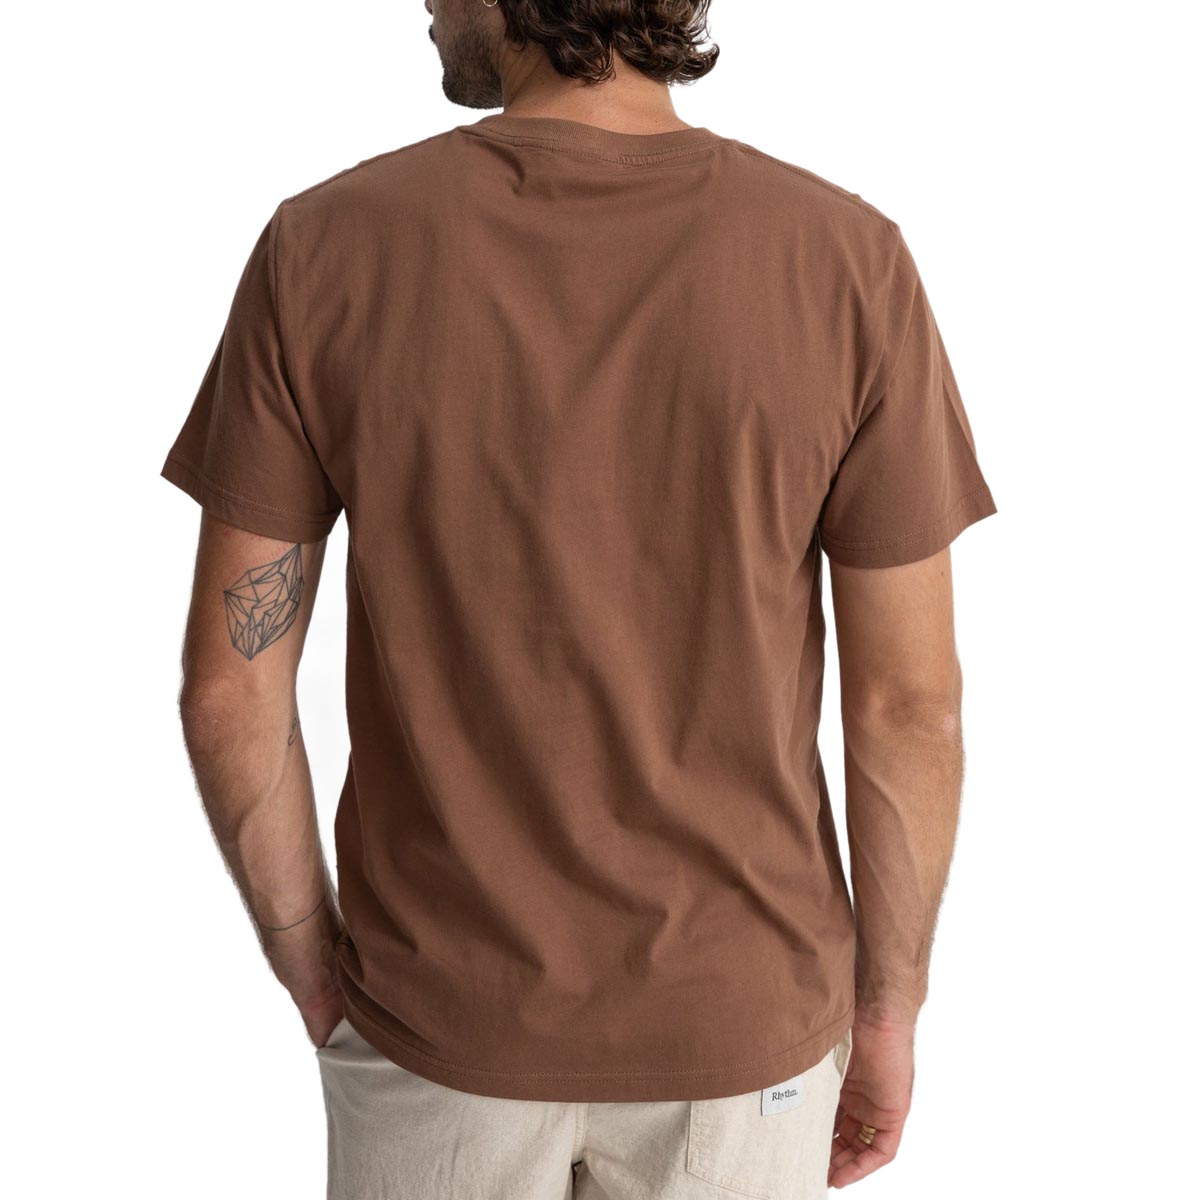 Rhythm Classic Brand T-Shirt - Chocolate image 4